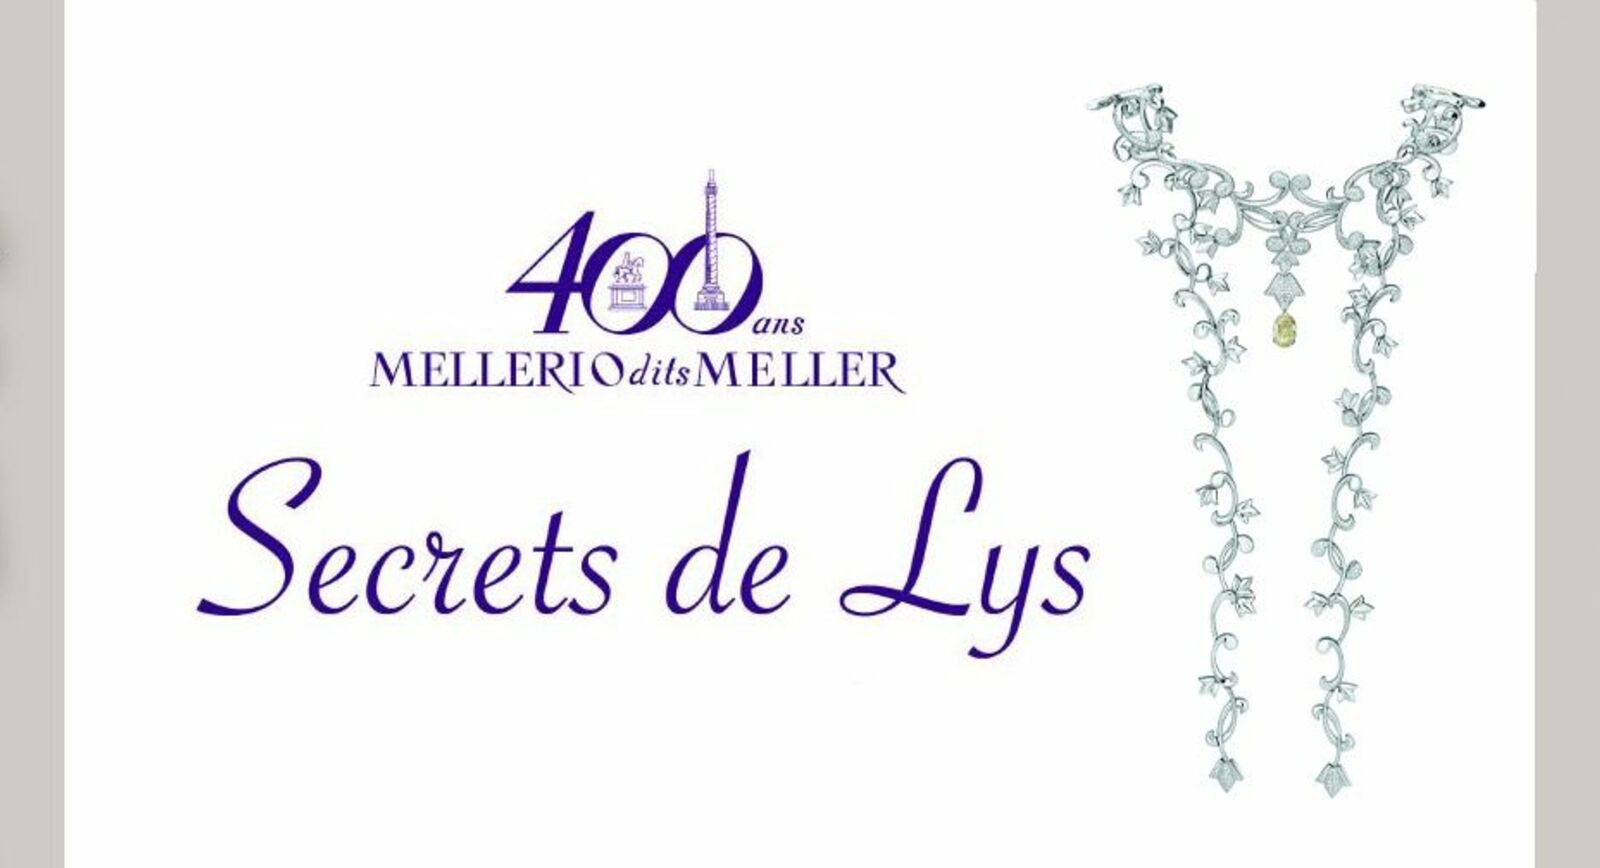 The new Secrets de Lys collection by Mellerio dits Meller